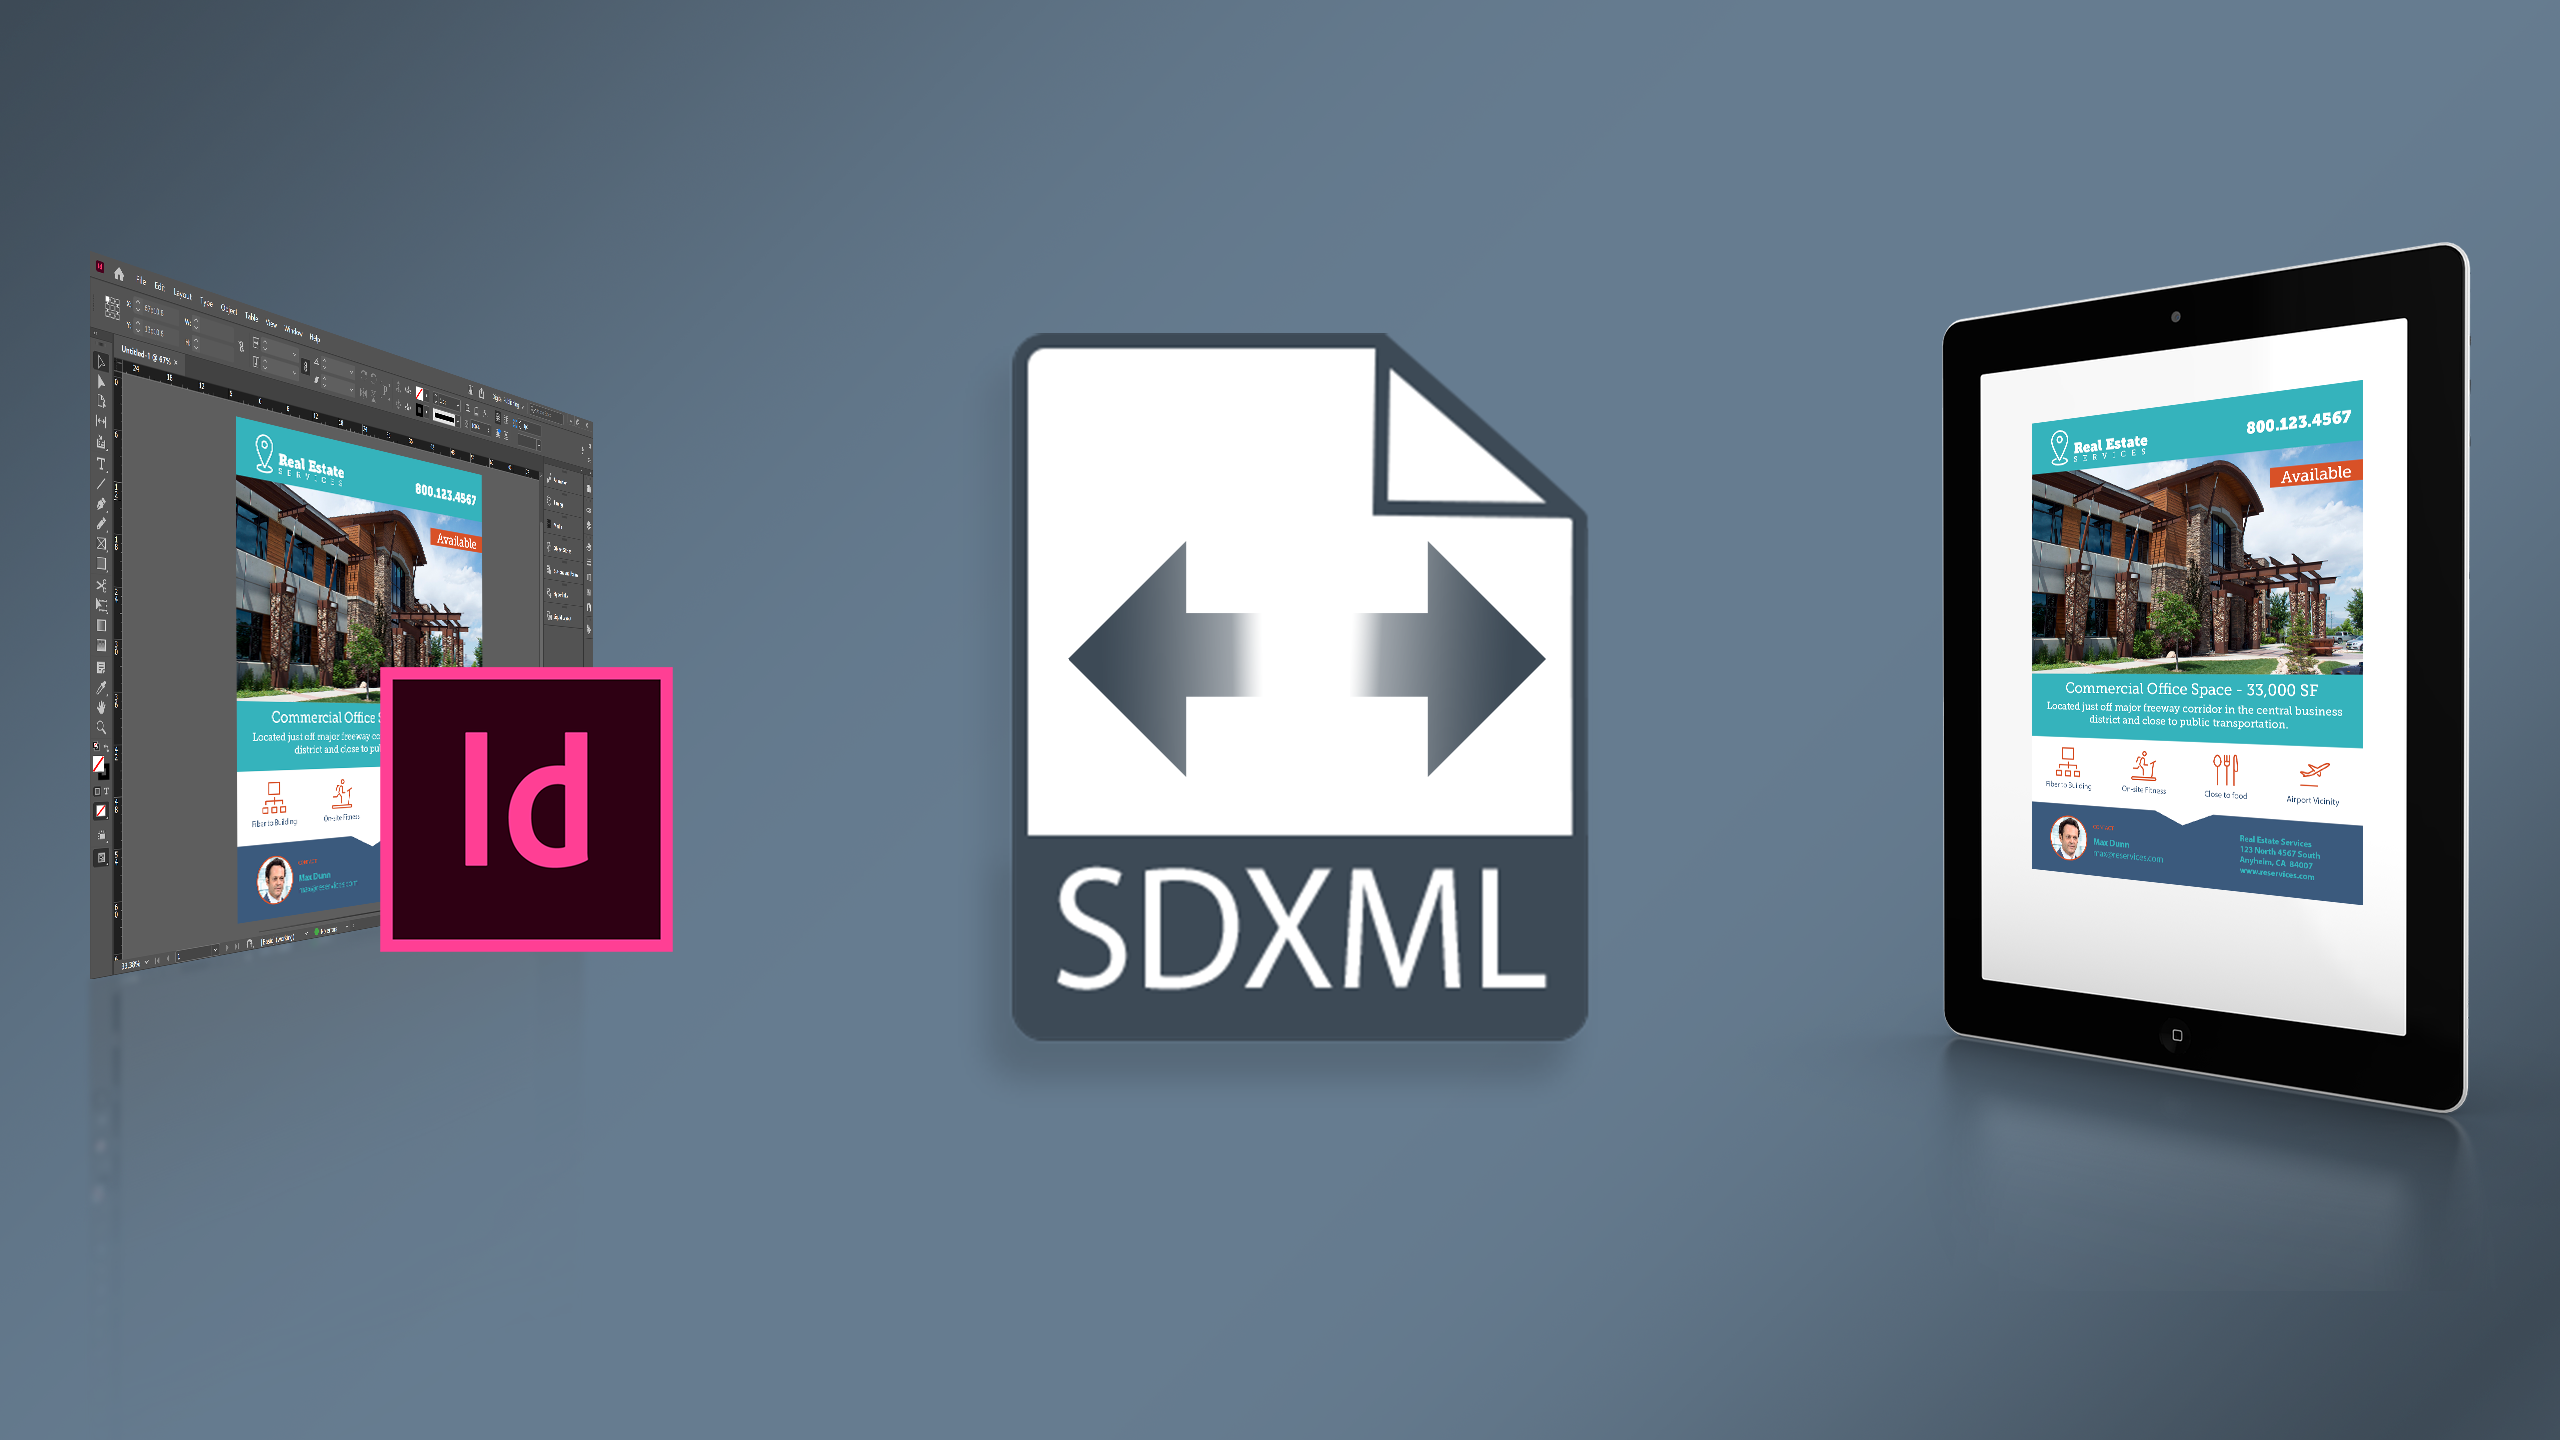 SDXML bridges web and print